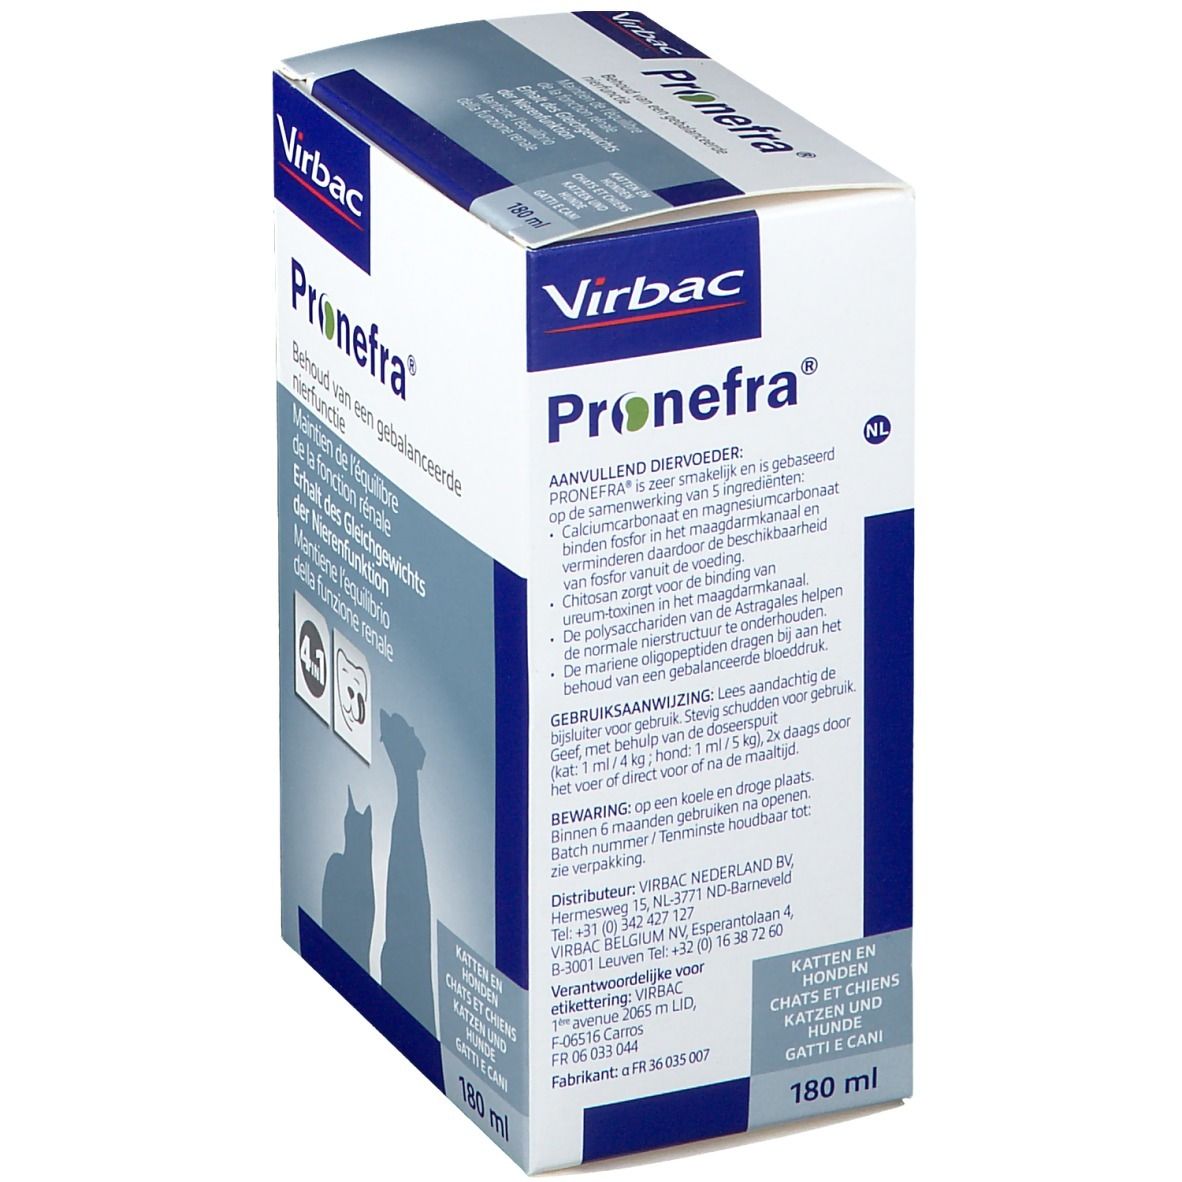 Virbac Pronefra®